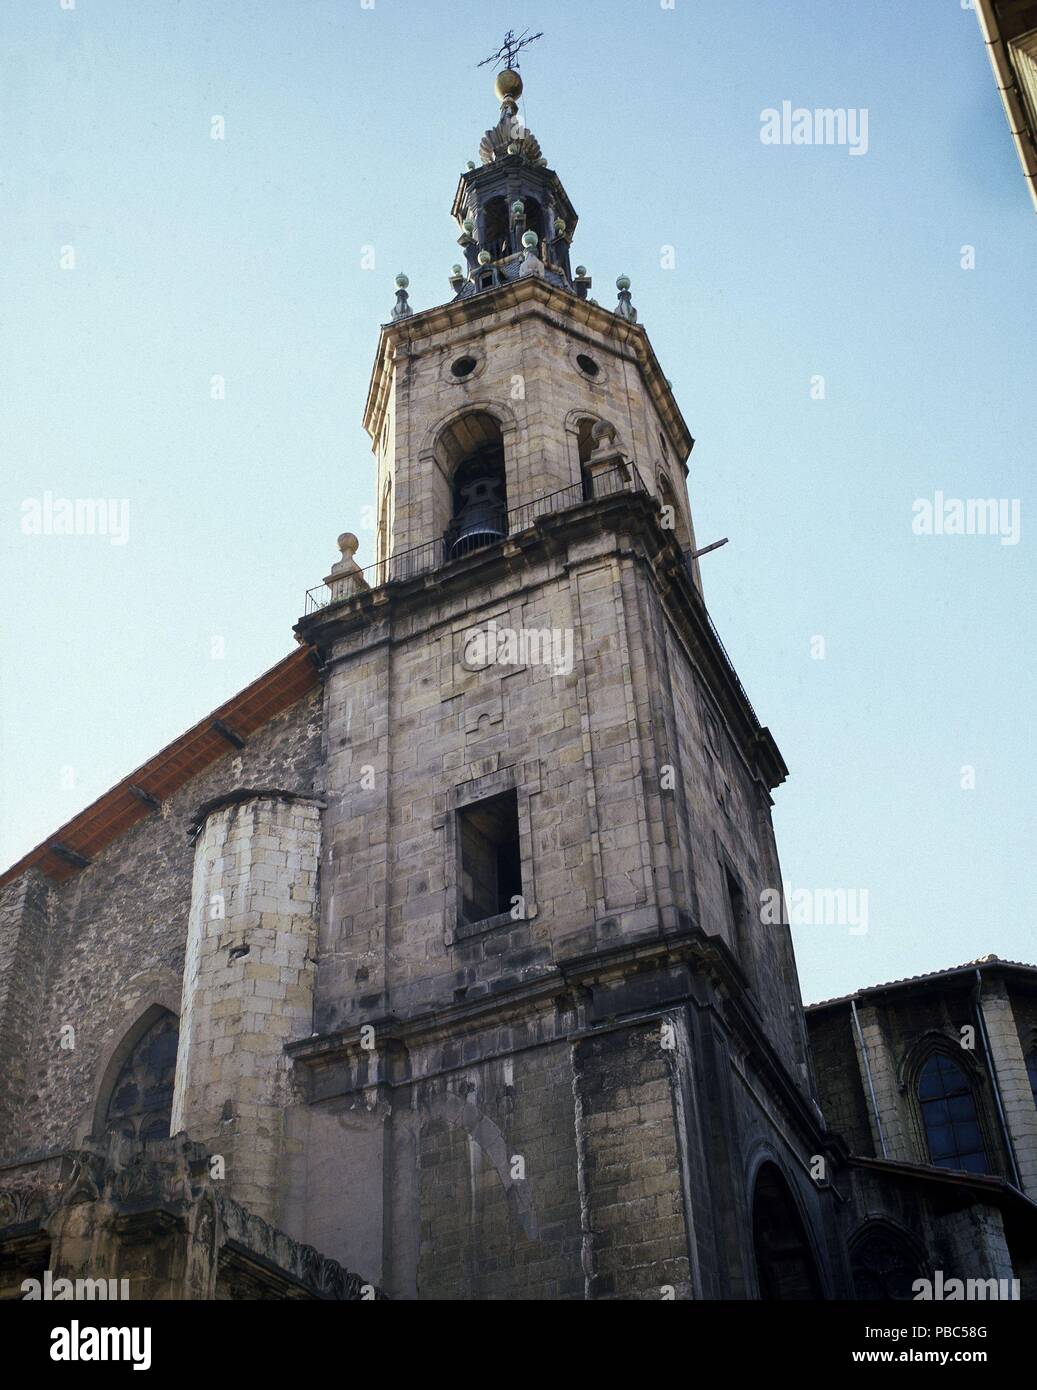 IGLESIA DE SAN PEDRO - TORRE. Location: ST. PETER'S CHURCH, VITORIA, ALAVA, SPAIN. Stock Photo